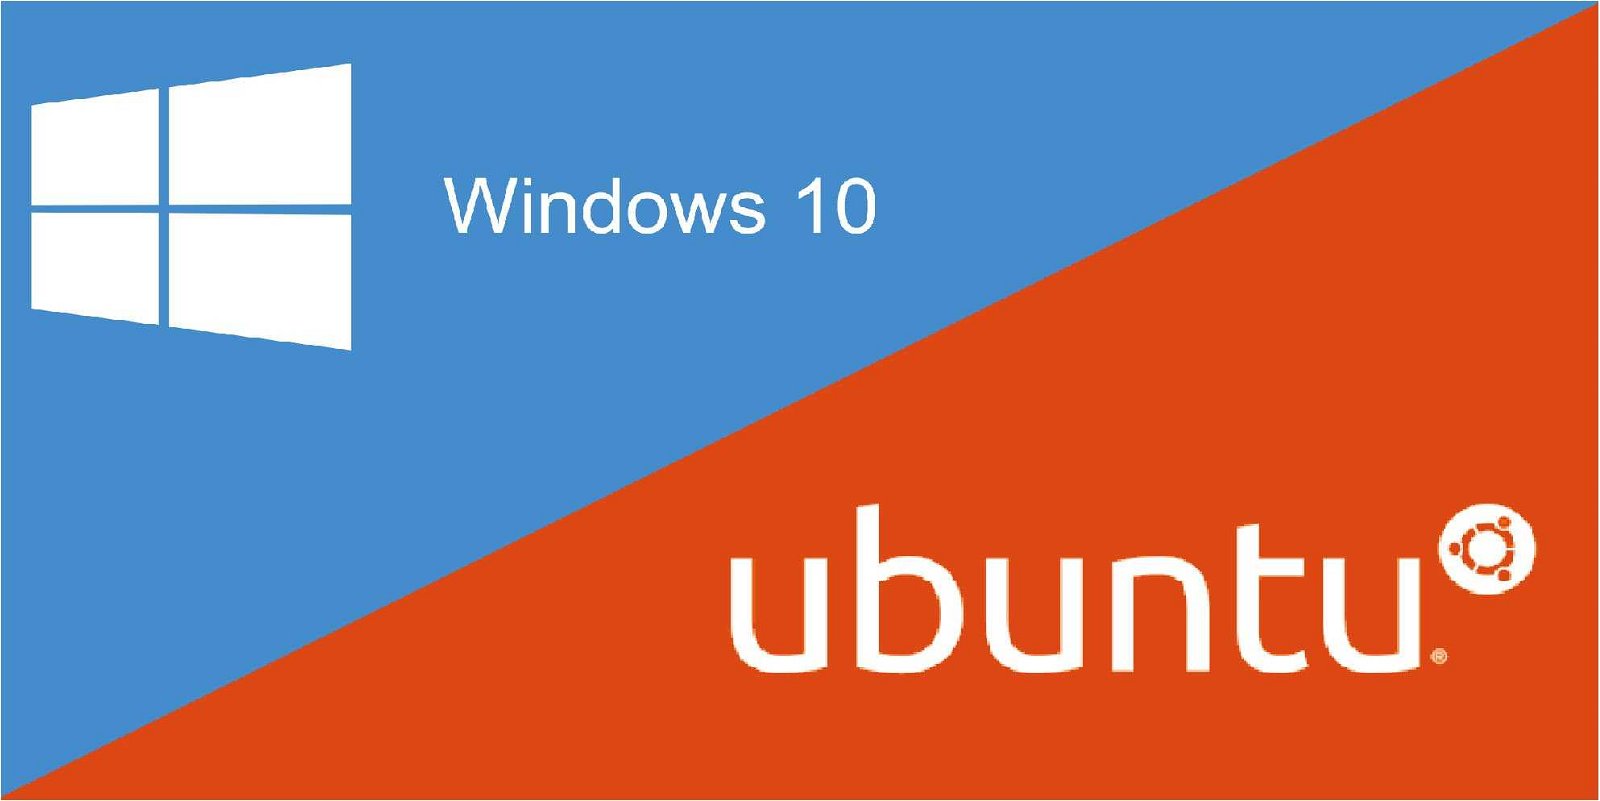 Canonical Microsoft Ubuntu Windows 10